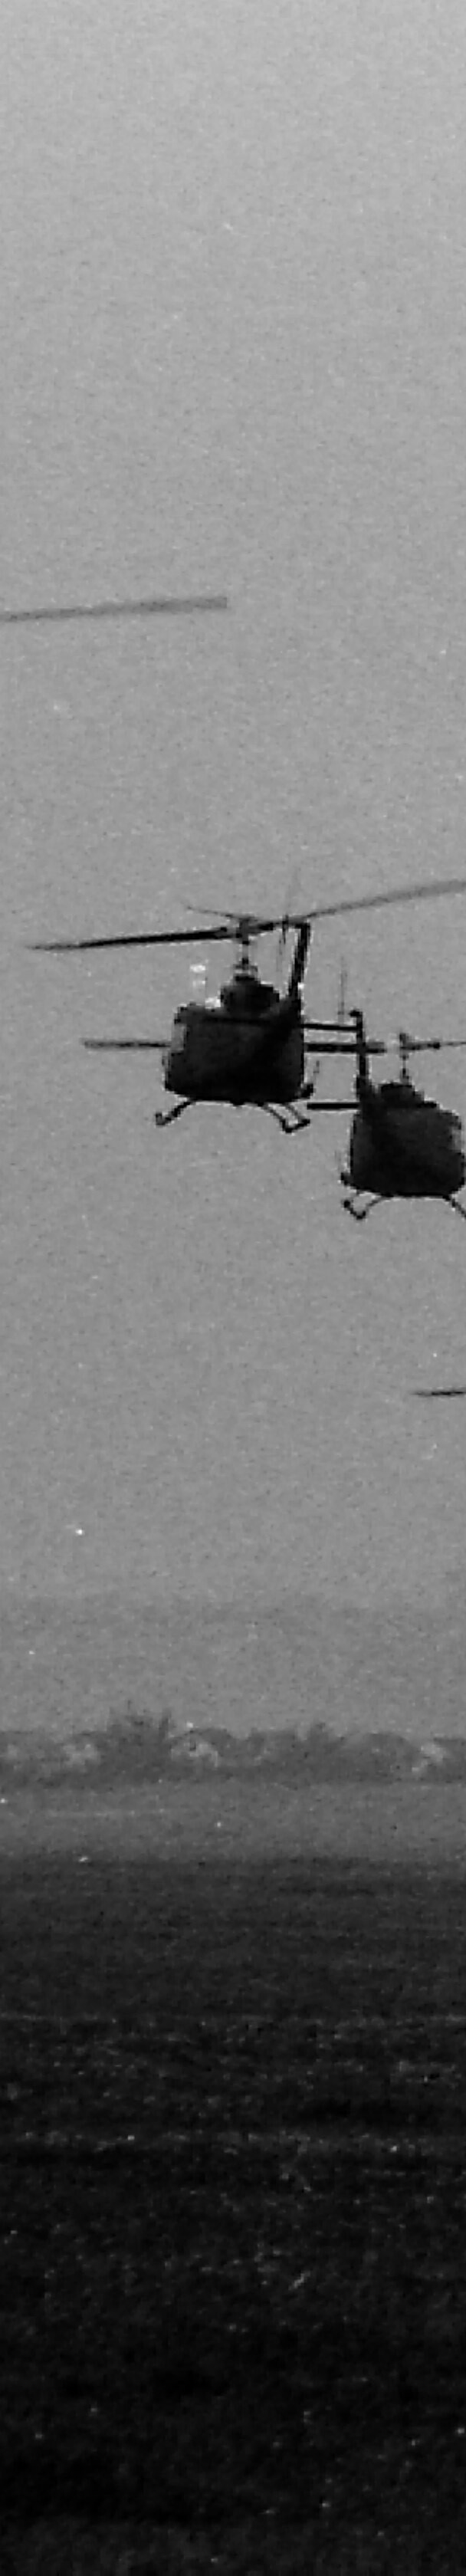 Choppers landing at the Cooke Barracks Flugplatz